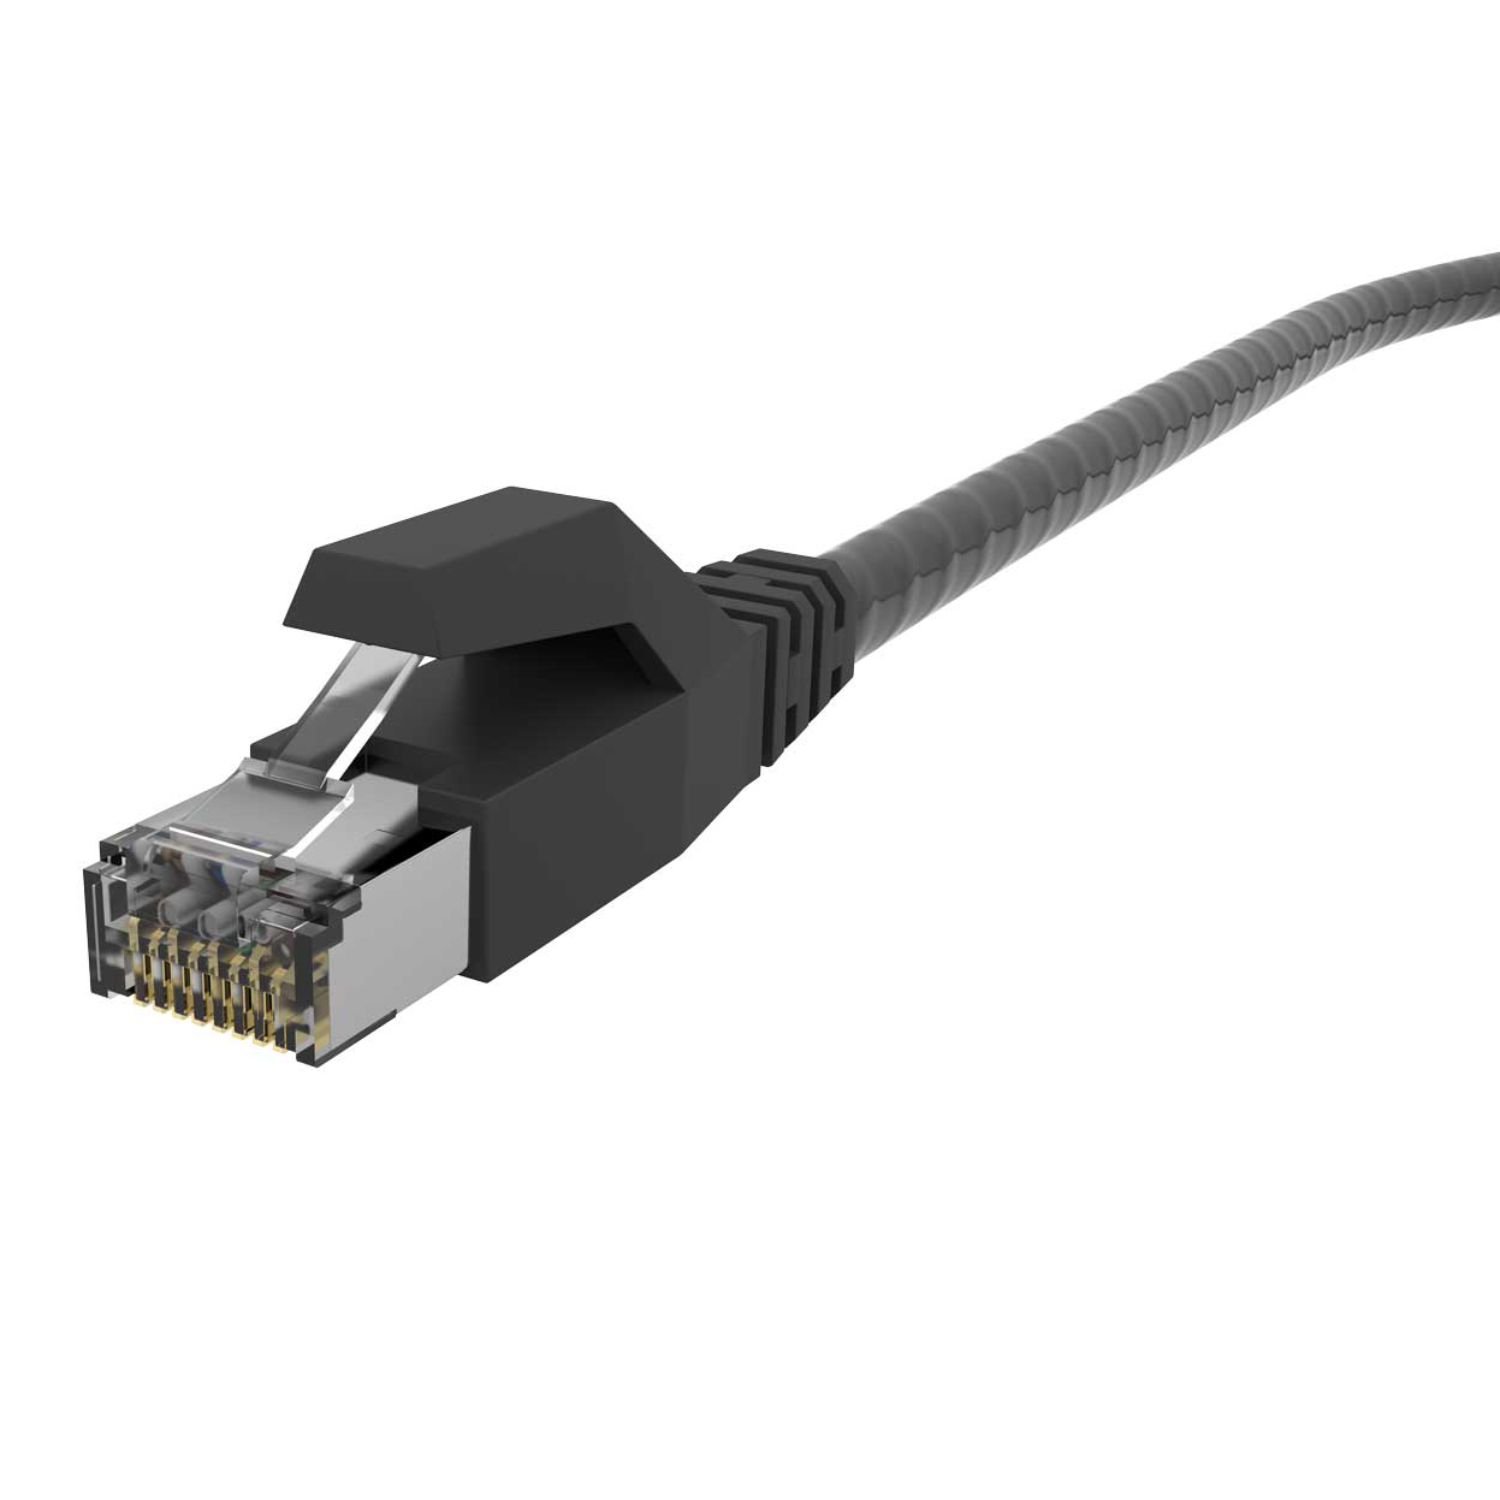 AIXONTEC Ethernetkabel Gigabit, UV-Beständig 0,5 m Netzwerkkabel, Outdoor 0,5m 10 RJ45 Lankabel